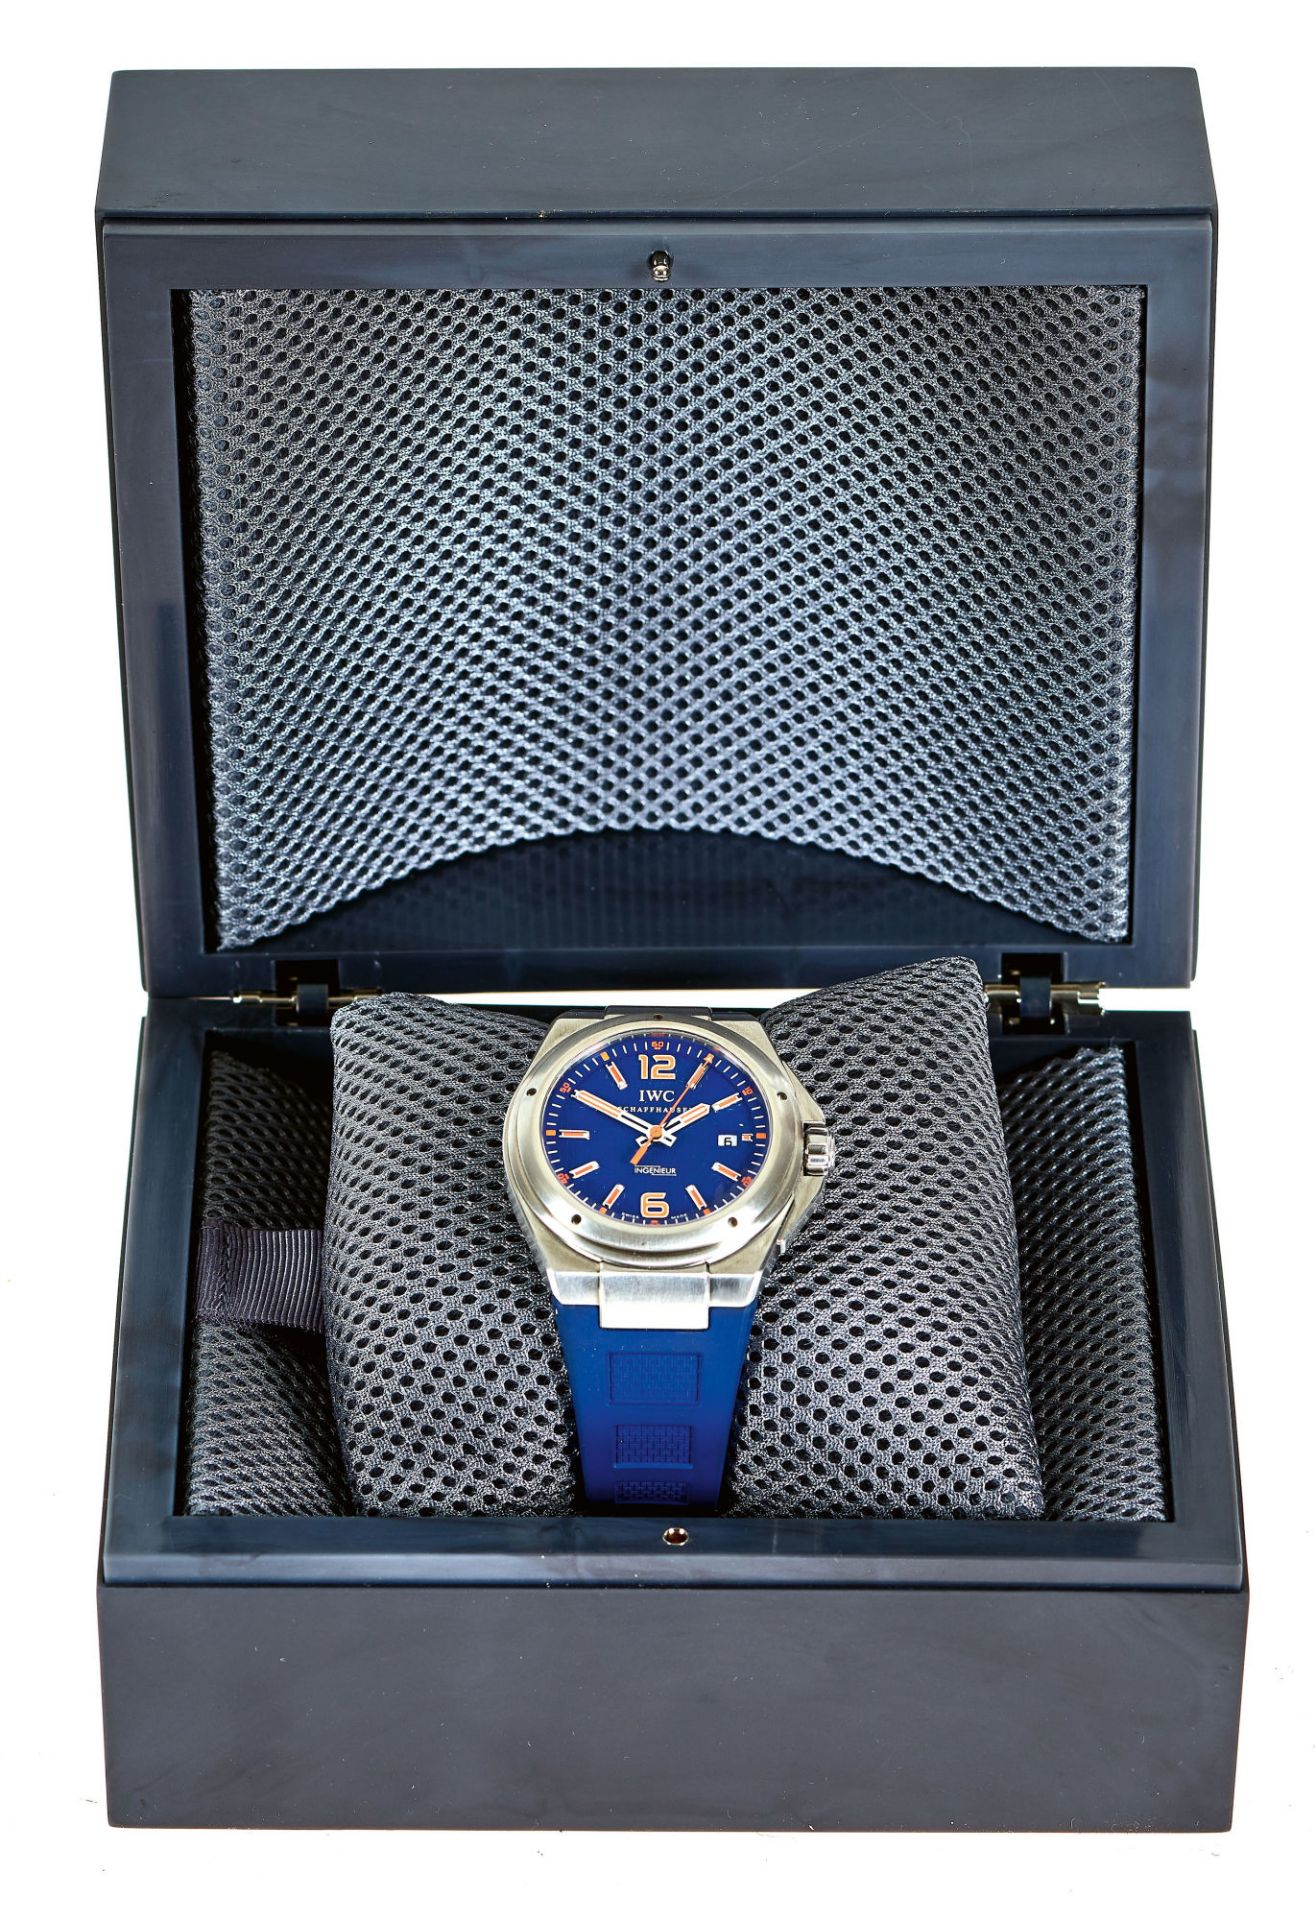 IWC: Herrenarmbanduhr "Ingenieur Plastiki", limitierte Edition. / IWC, Gentleman's wristwatch ... - Image 2 of 2